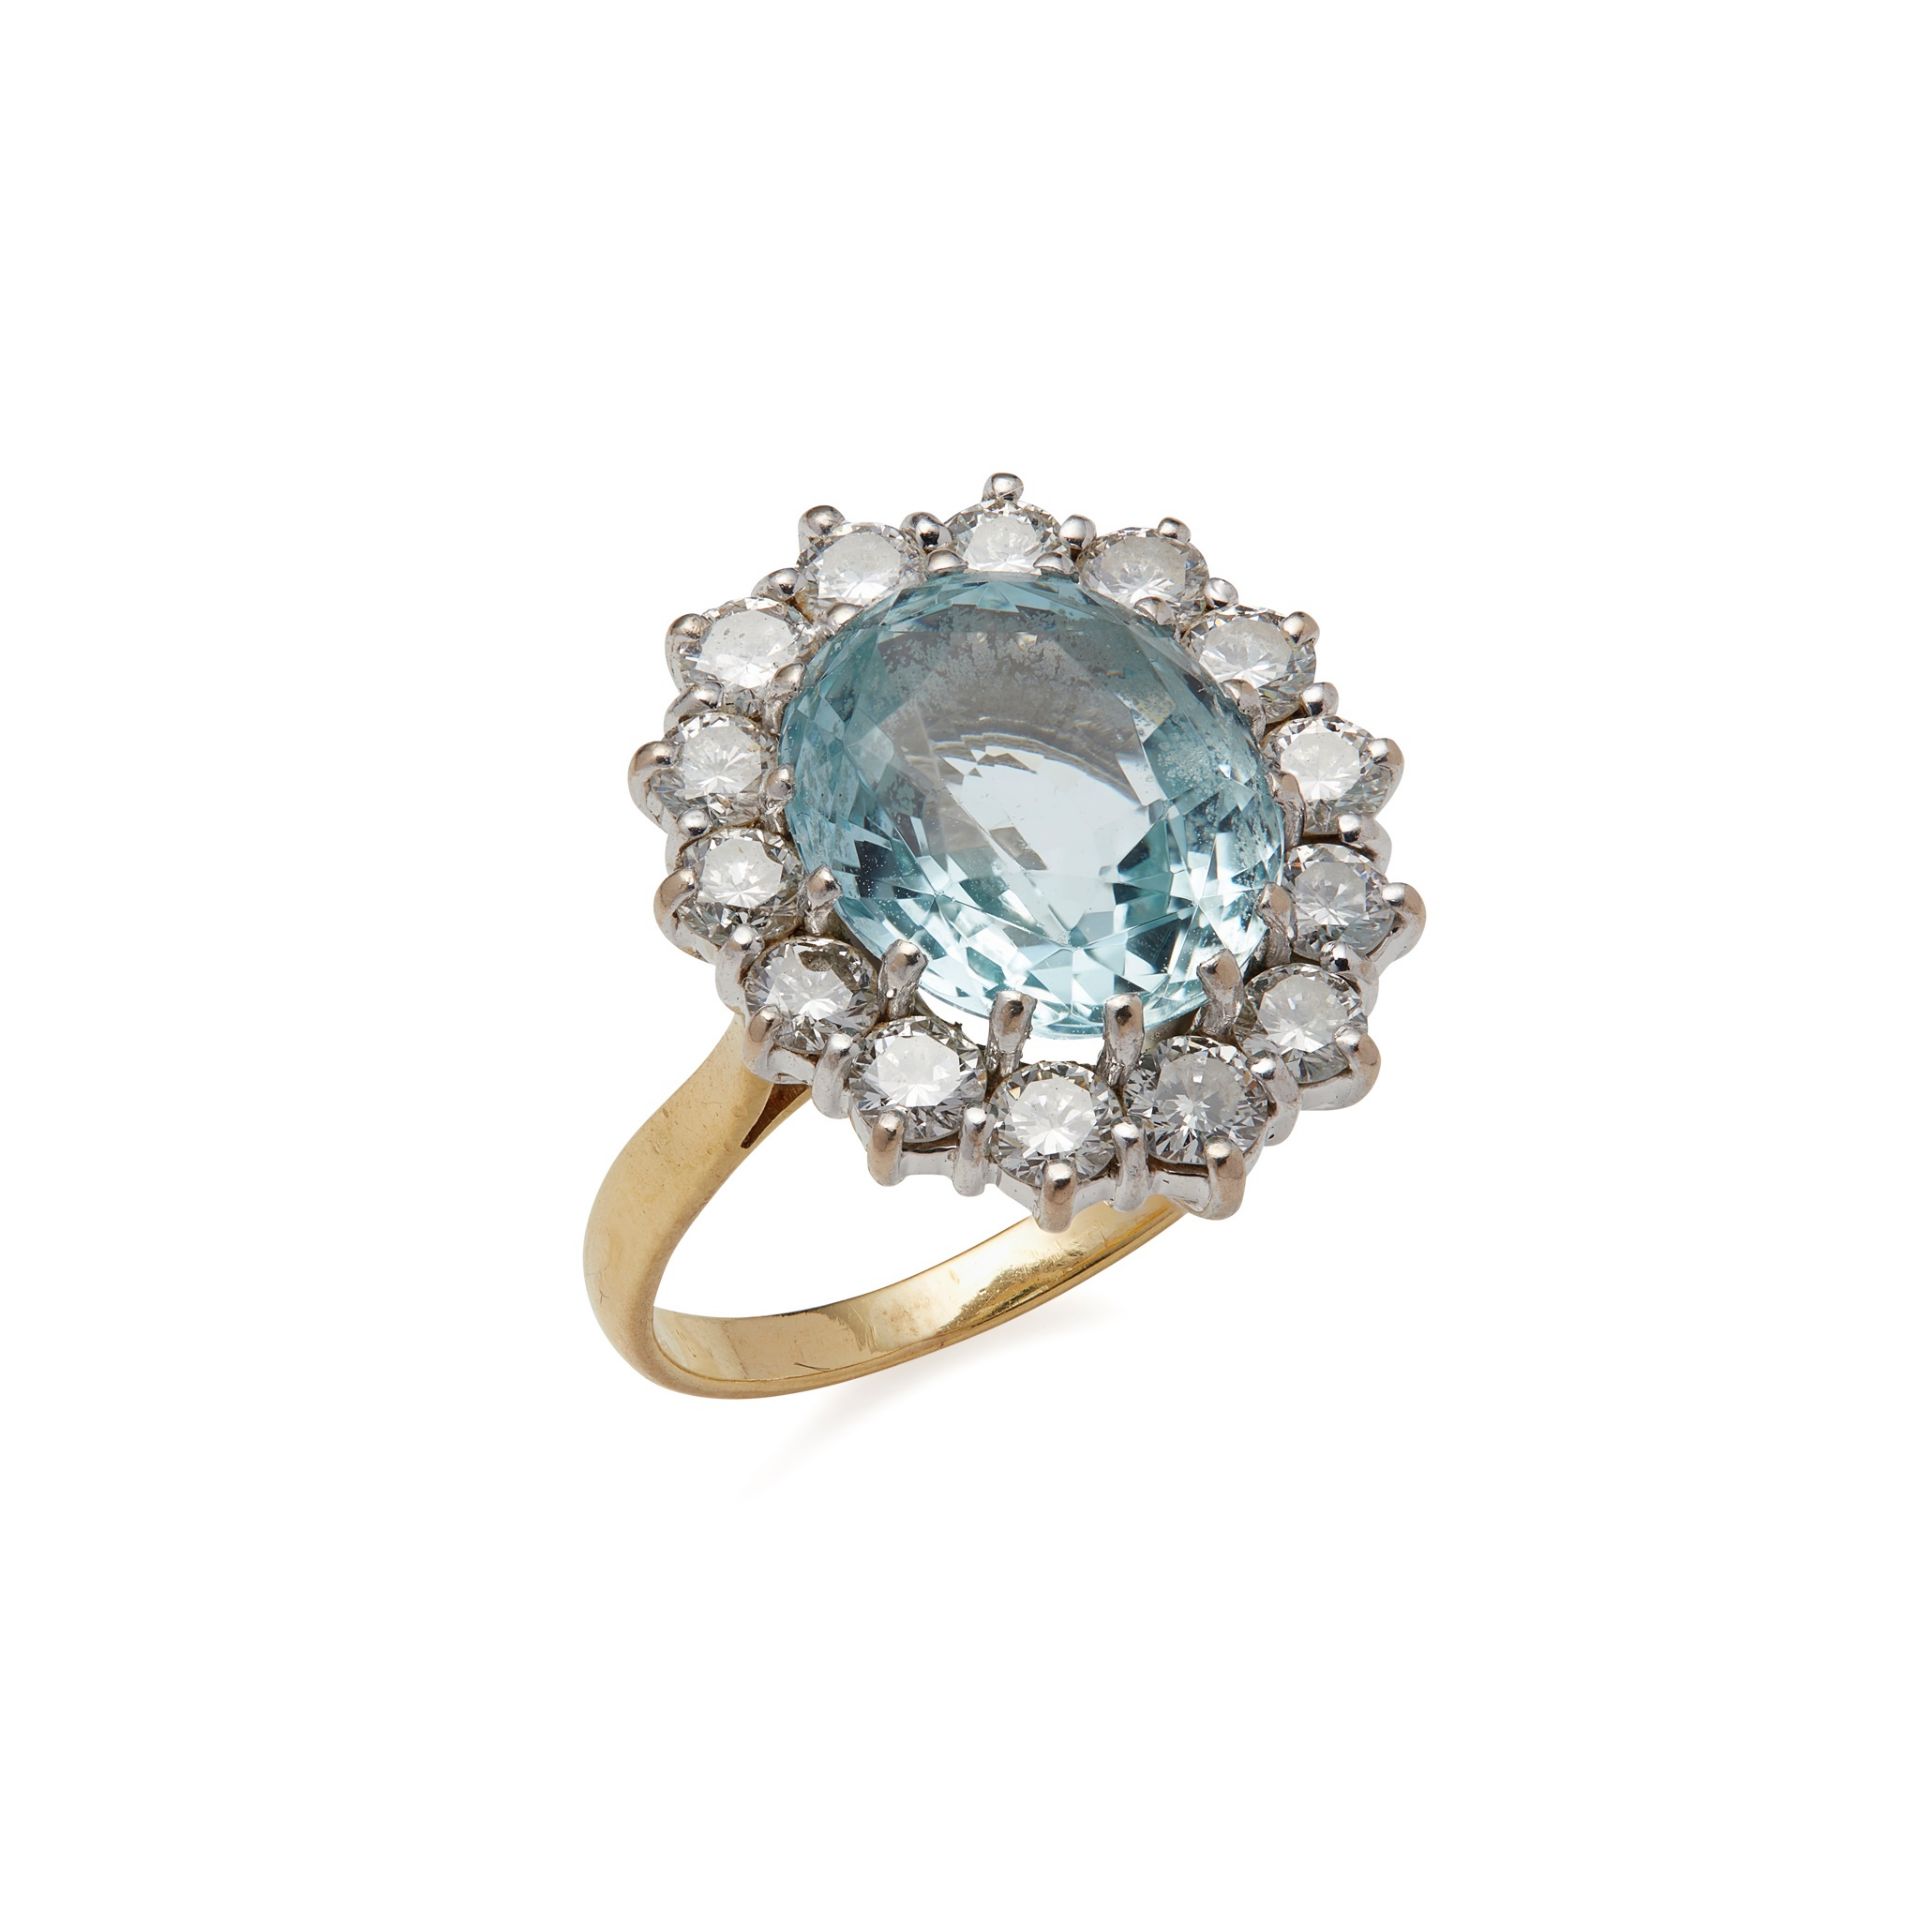 An aquamarine and diamond set cluster ring